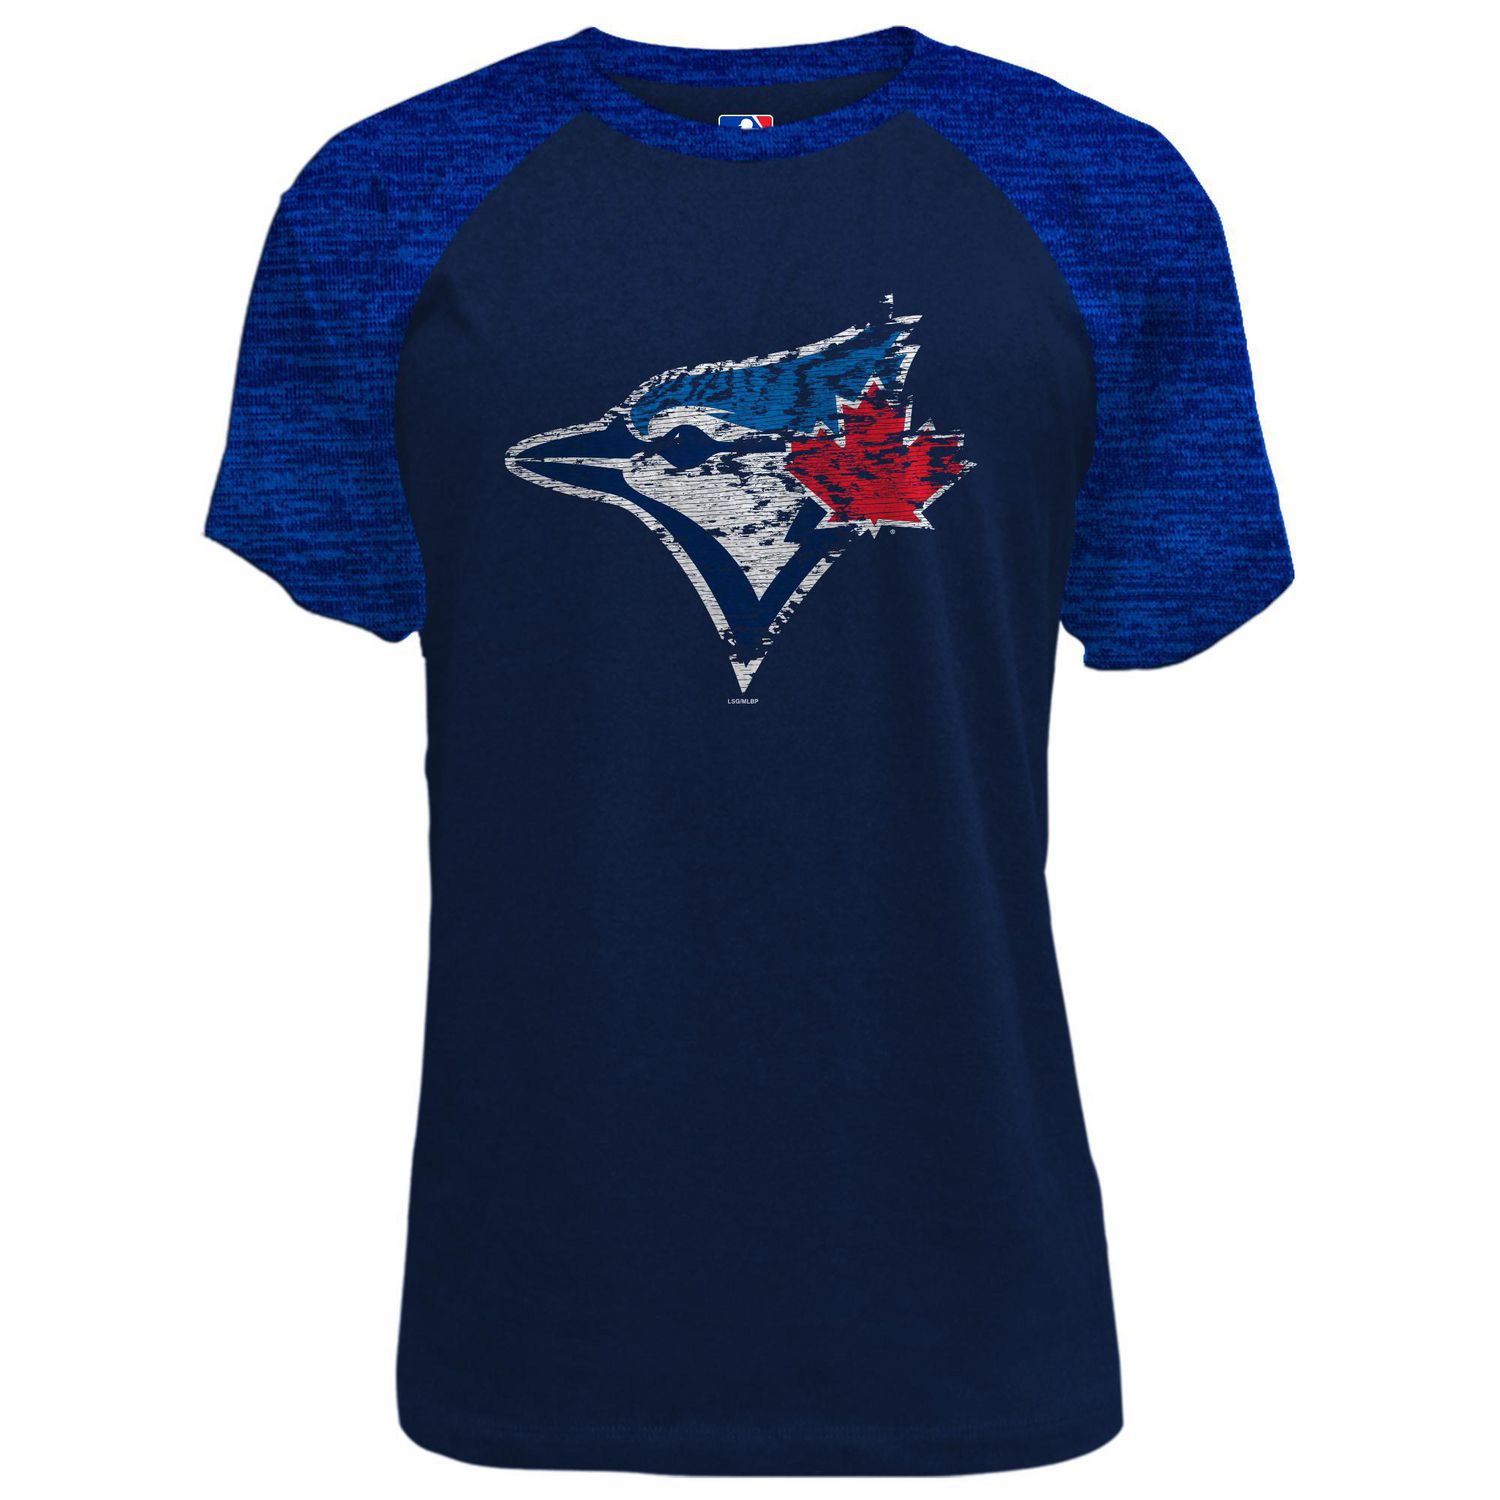 Toronto Blue Jays - This week's Thursday Night in the 6ix t-shirt